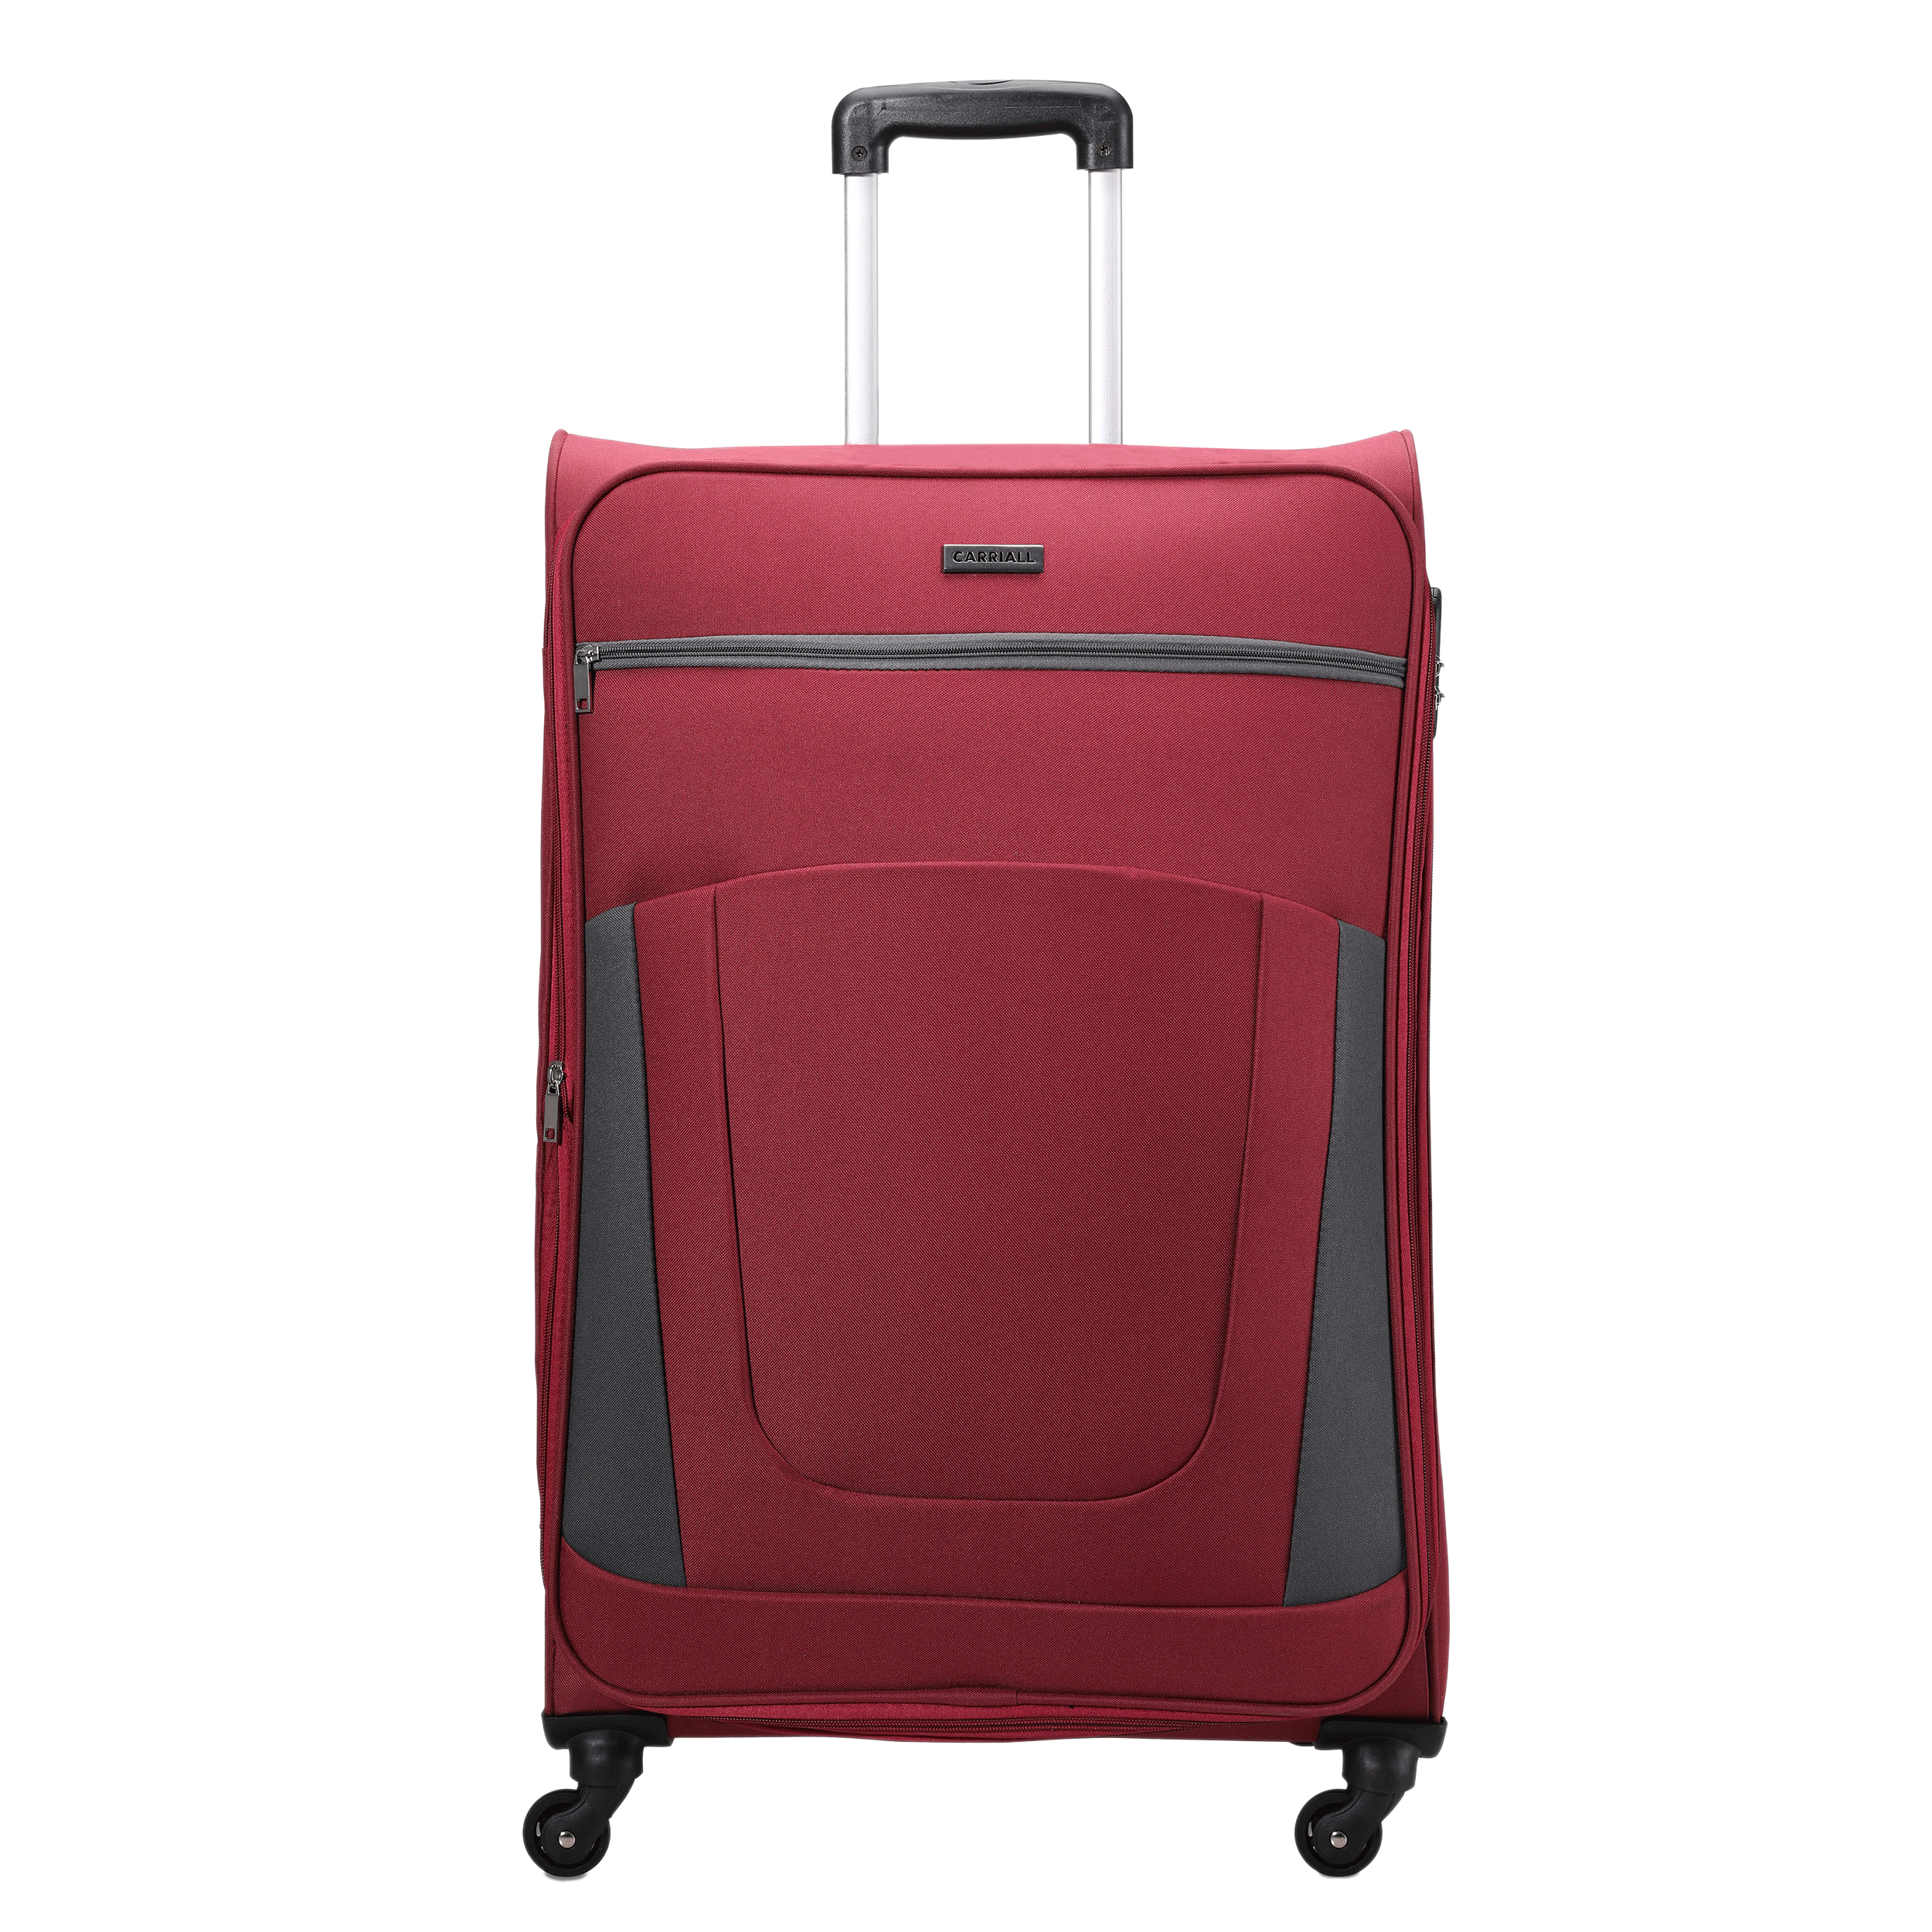 Carriall Sleek Trolley Bag (Expander, CASLSL002, Red)